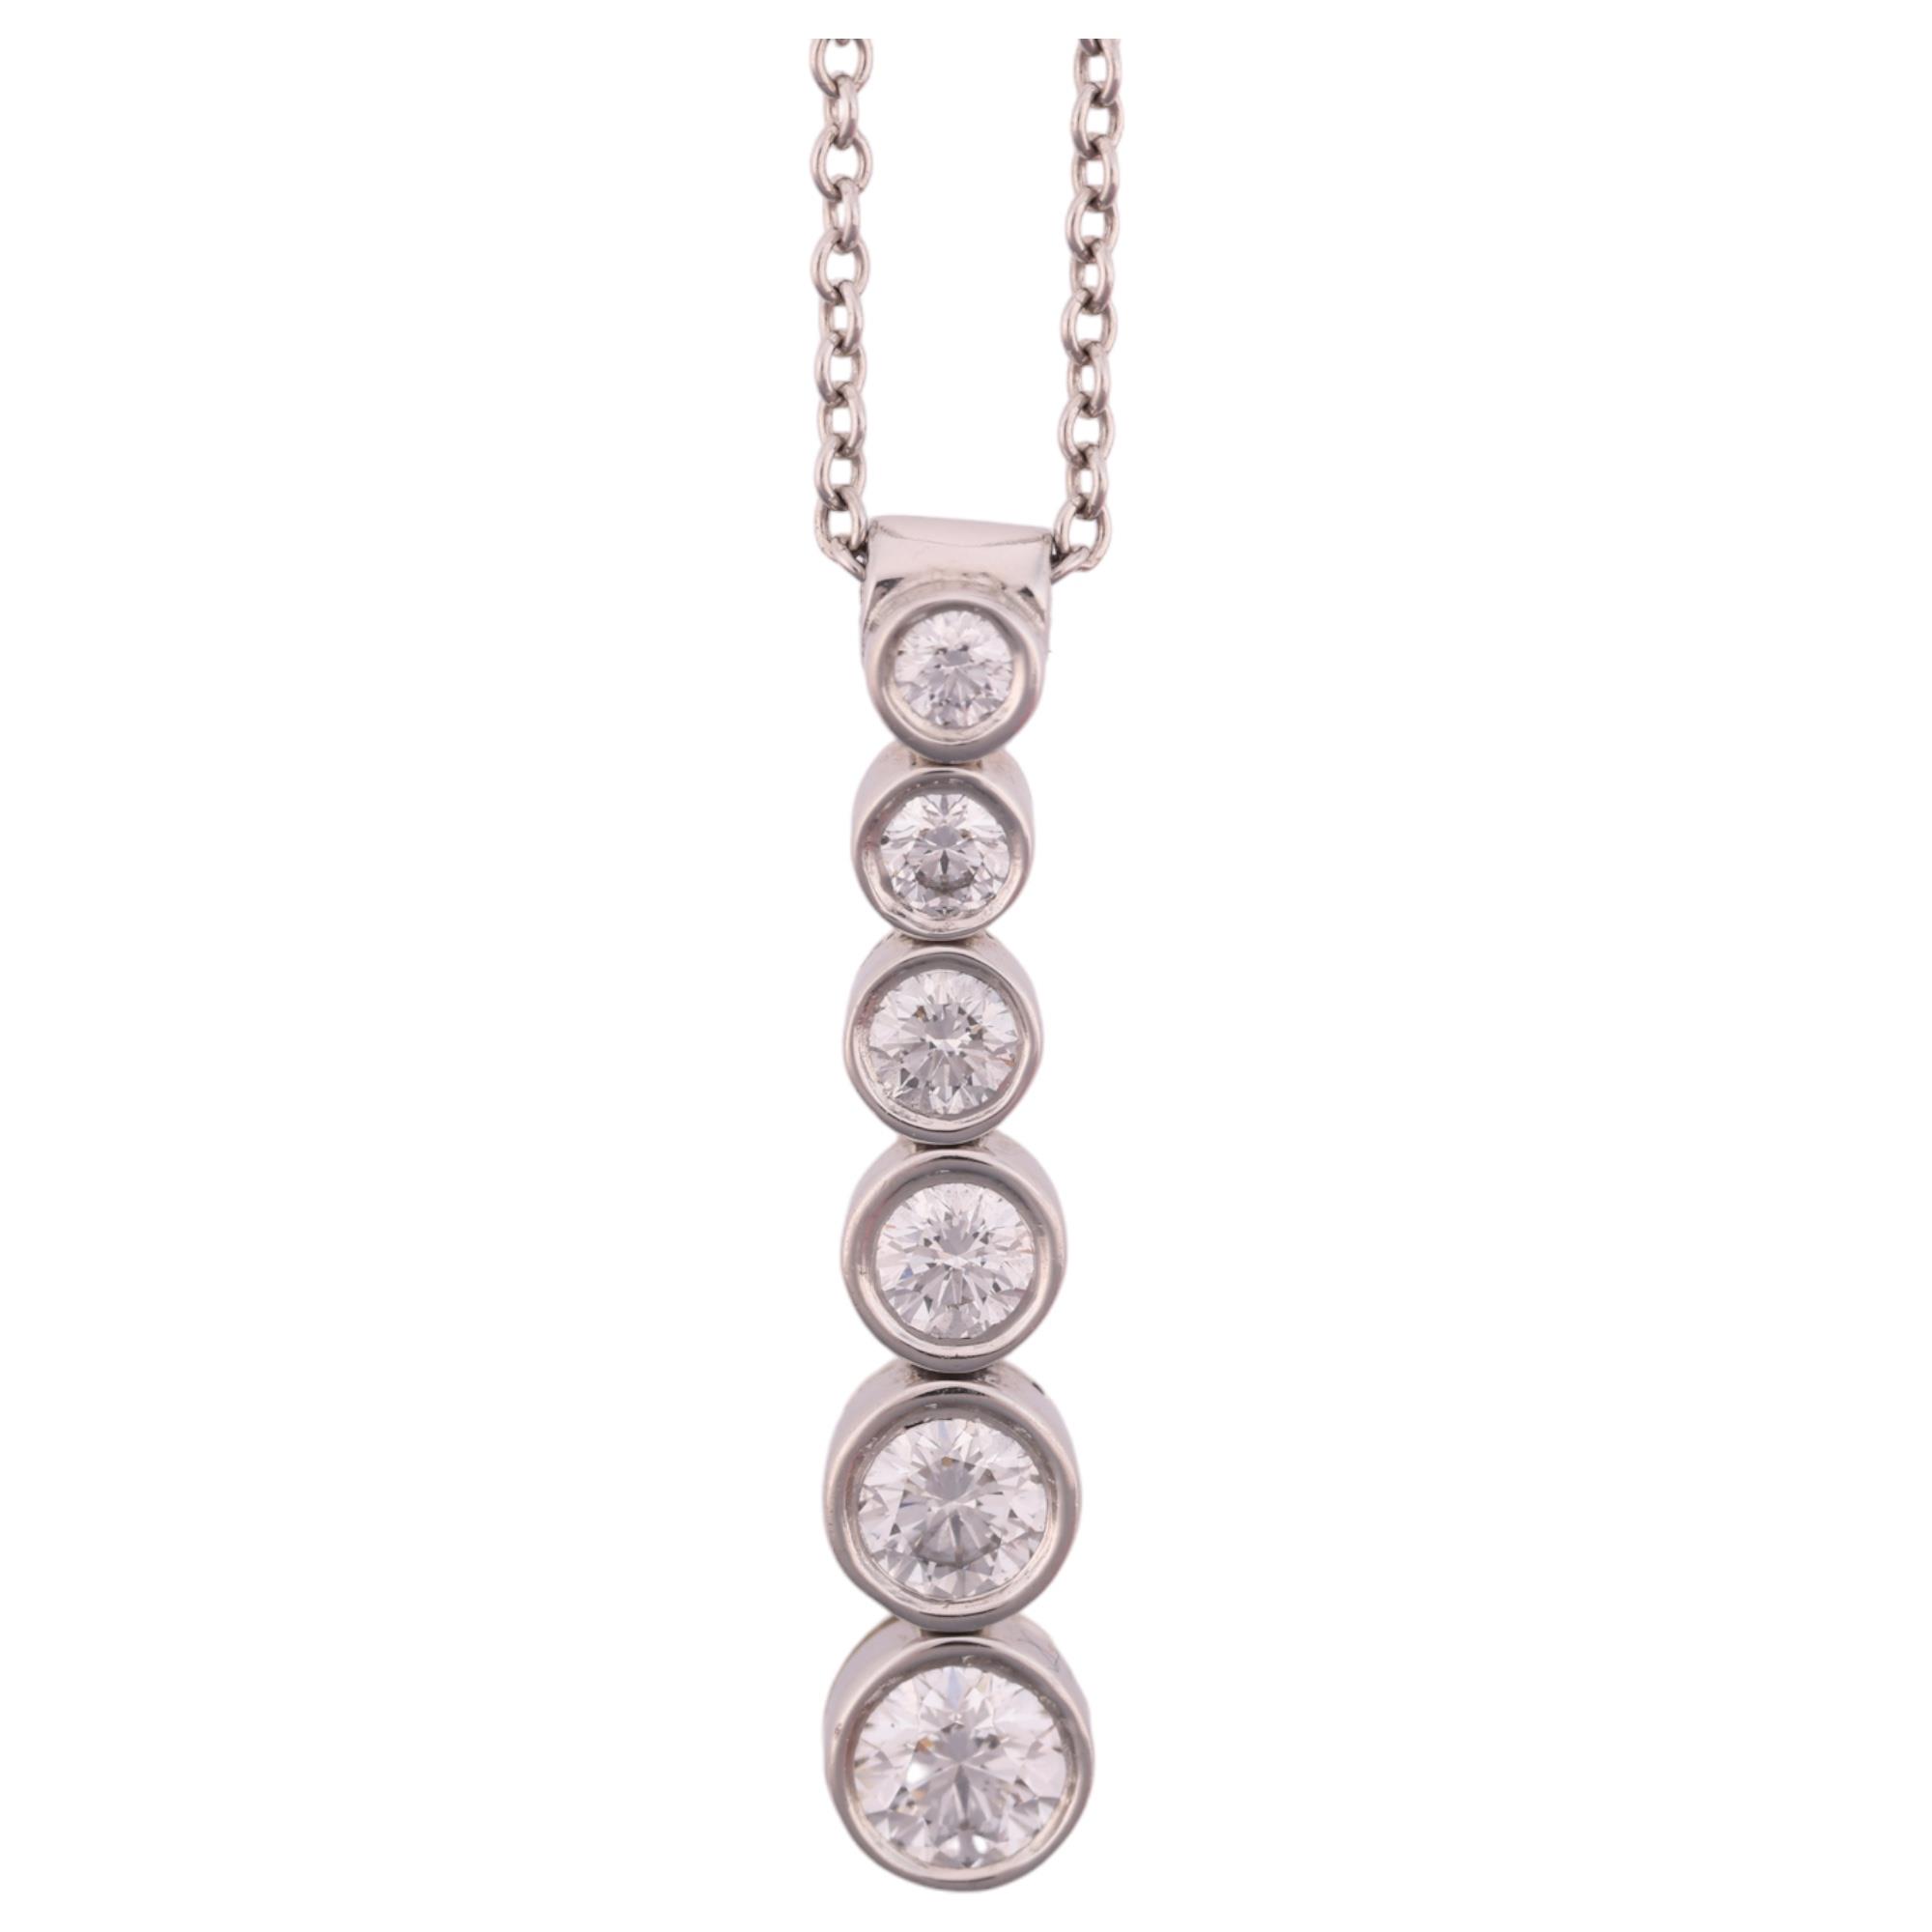 TIFFANY & CO - a platinum diamond Jazz pendant necklace, circa 2003, set with graduated modern round